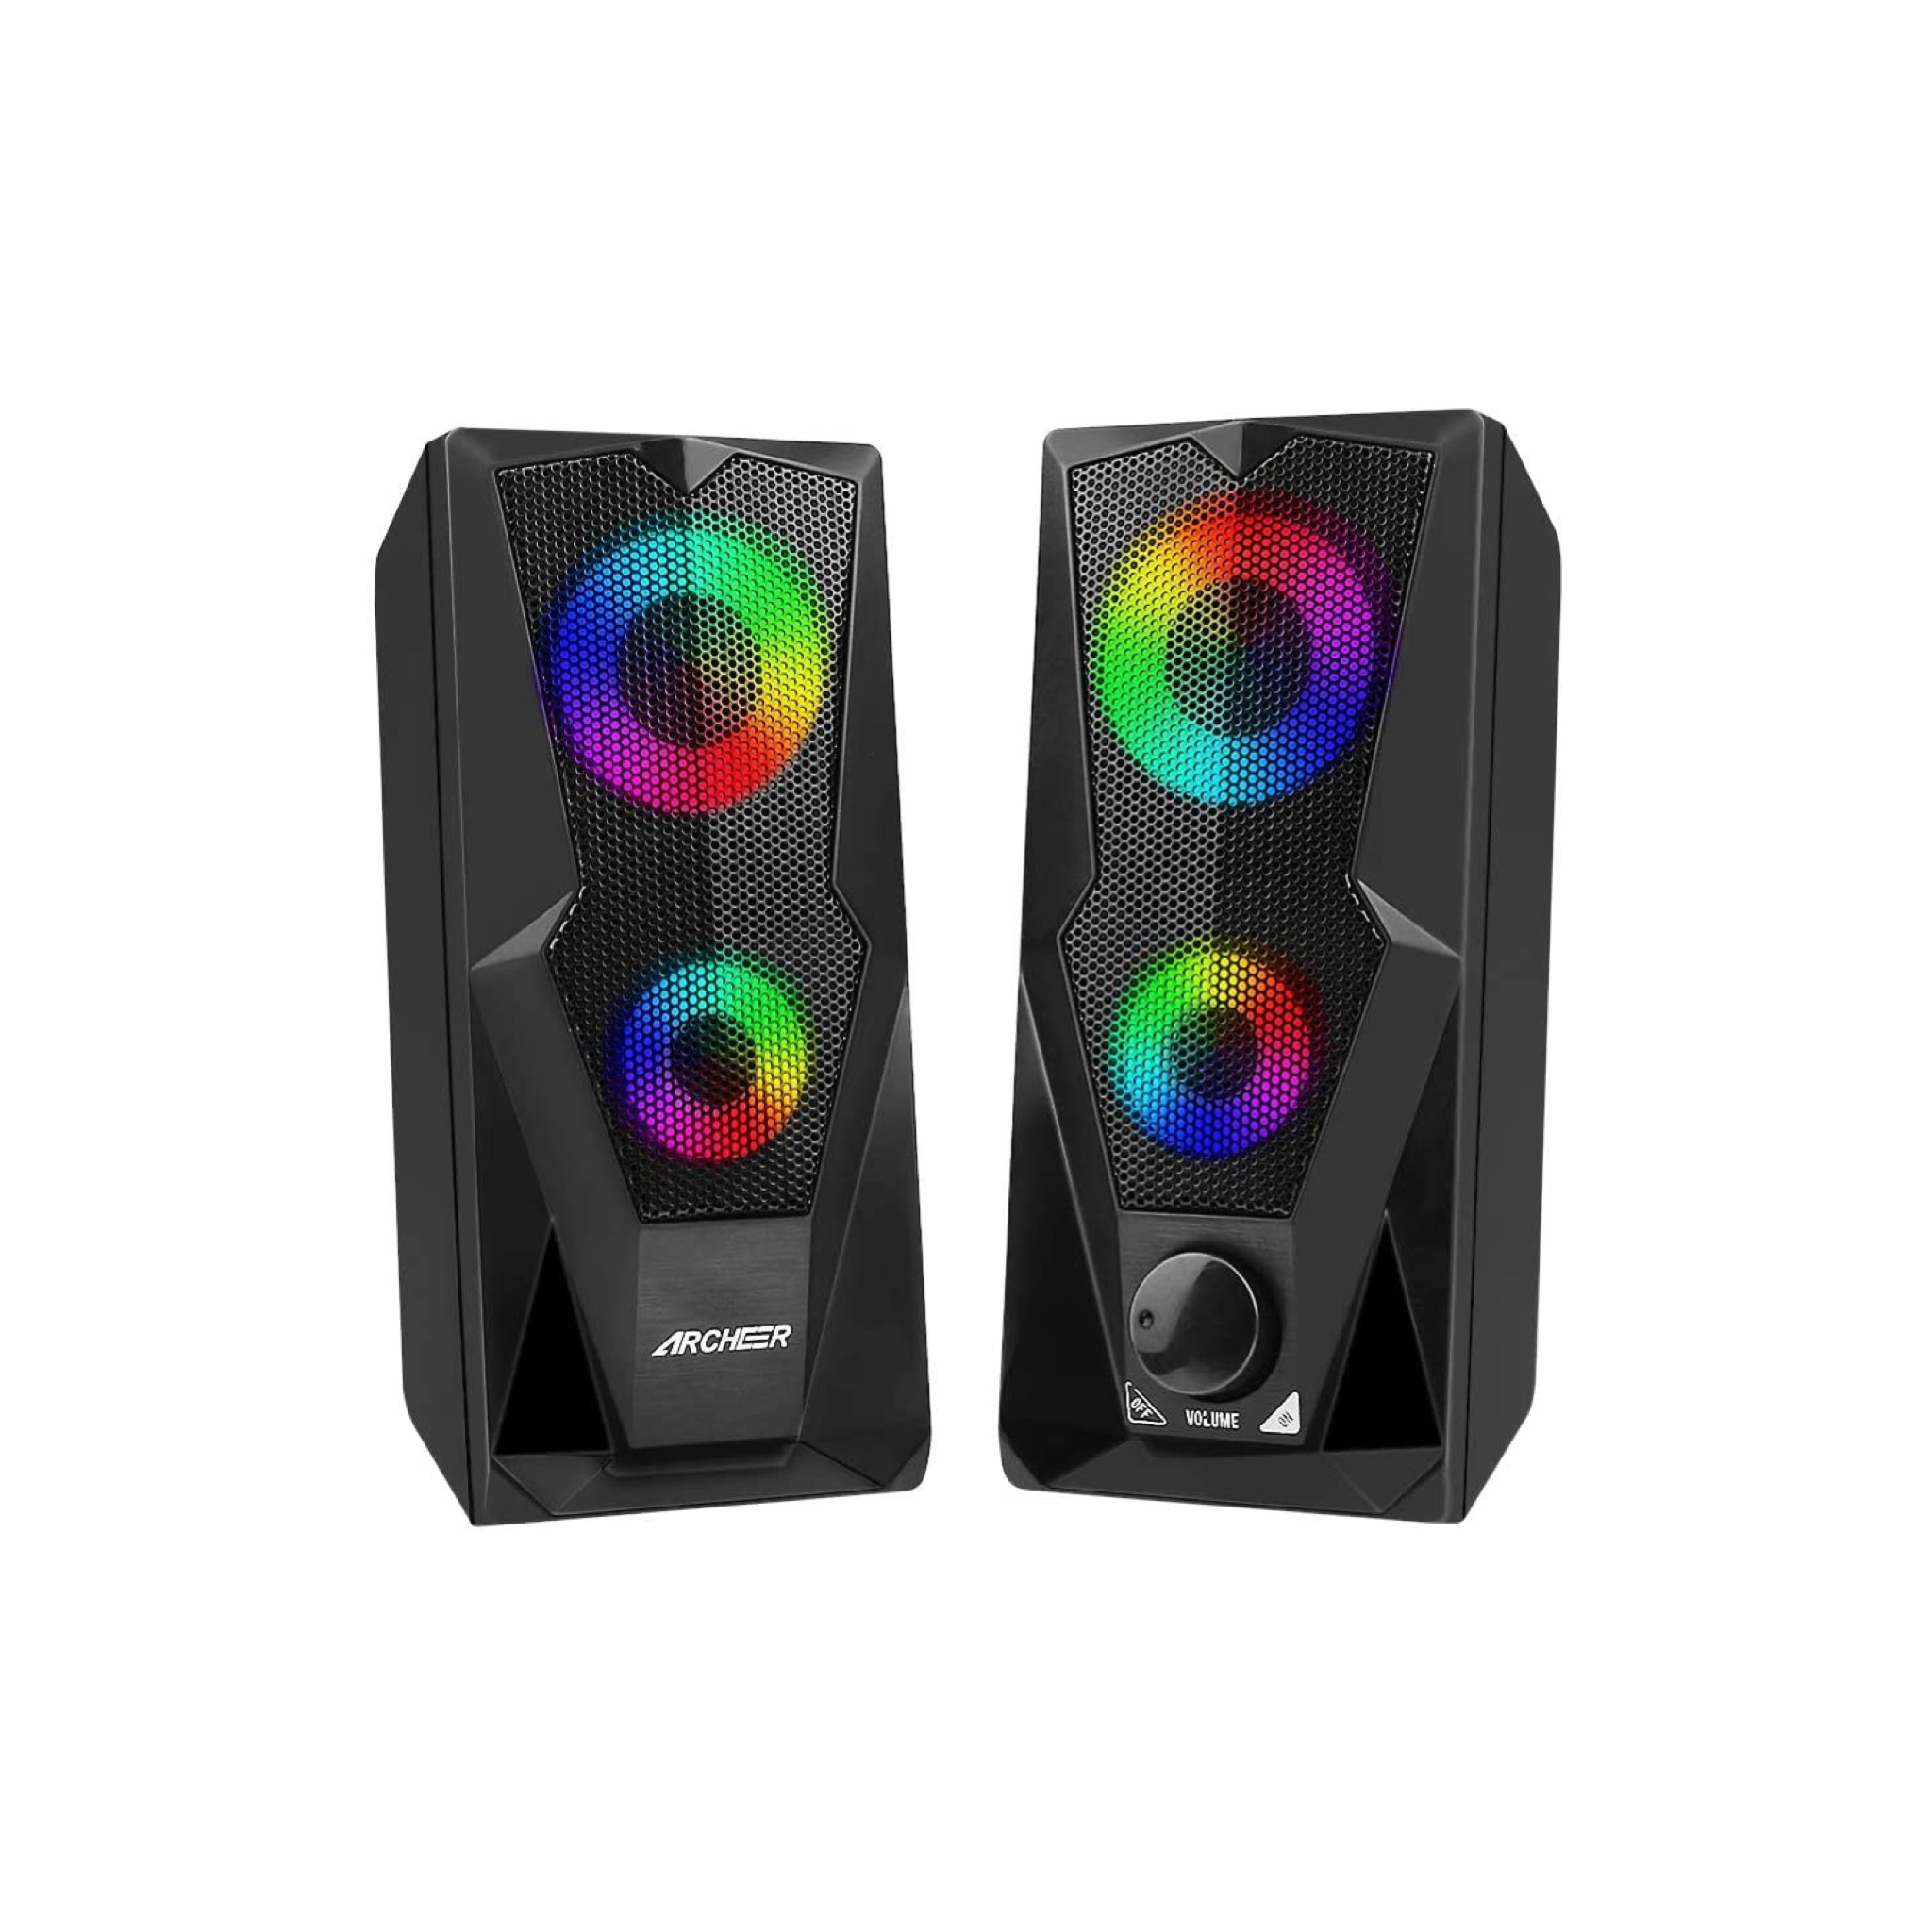 Archer RGB LED Backlight Speakers